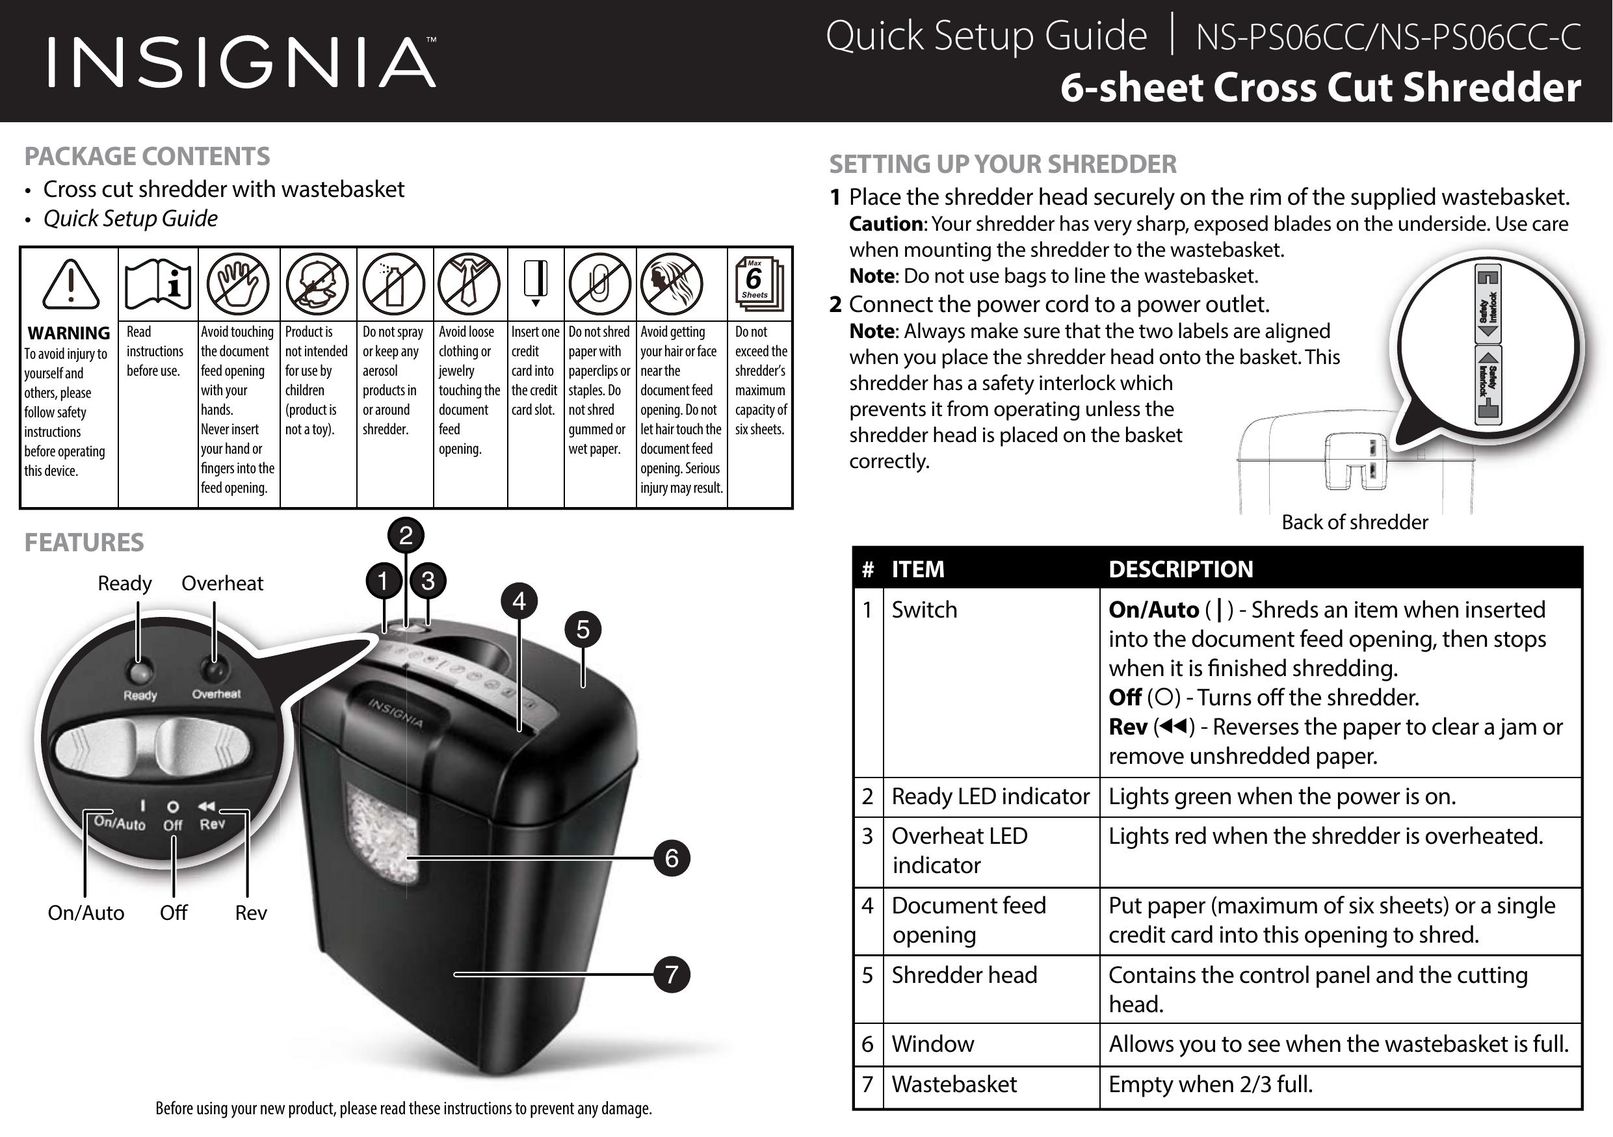 Insignia NS-PS06CC-C Paper Shredder User Manual